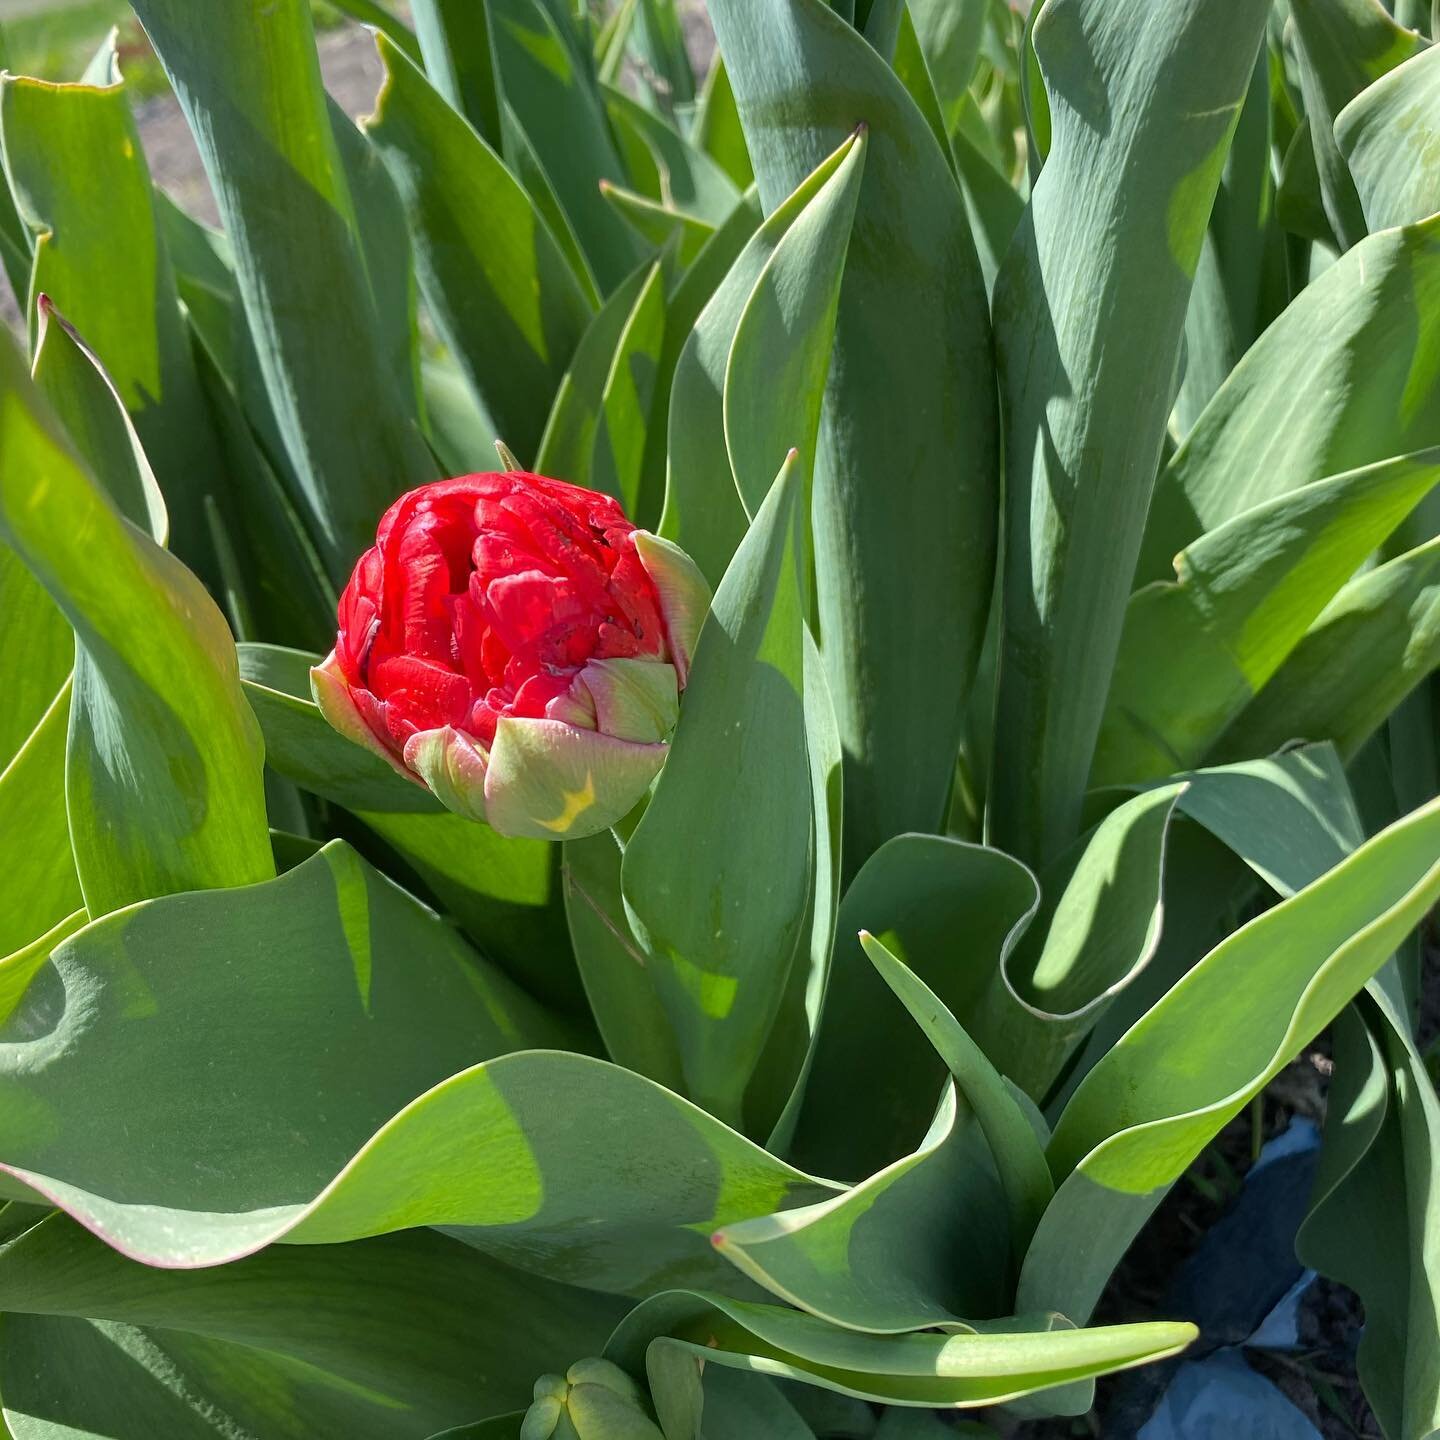 Tulips💙 #tulips #cachevalleyflowerfarm #utahflowers #blooms